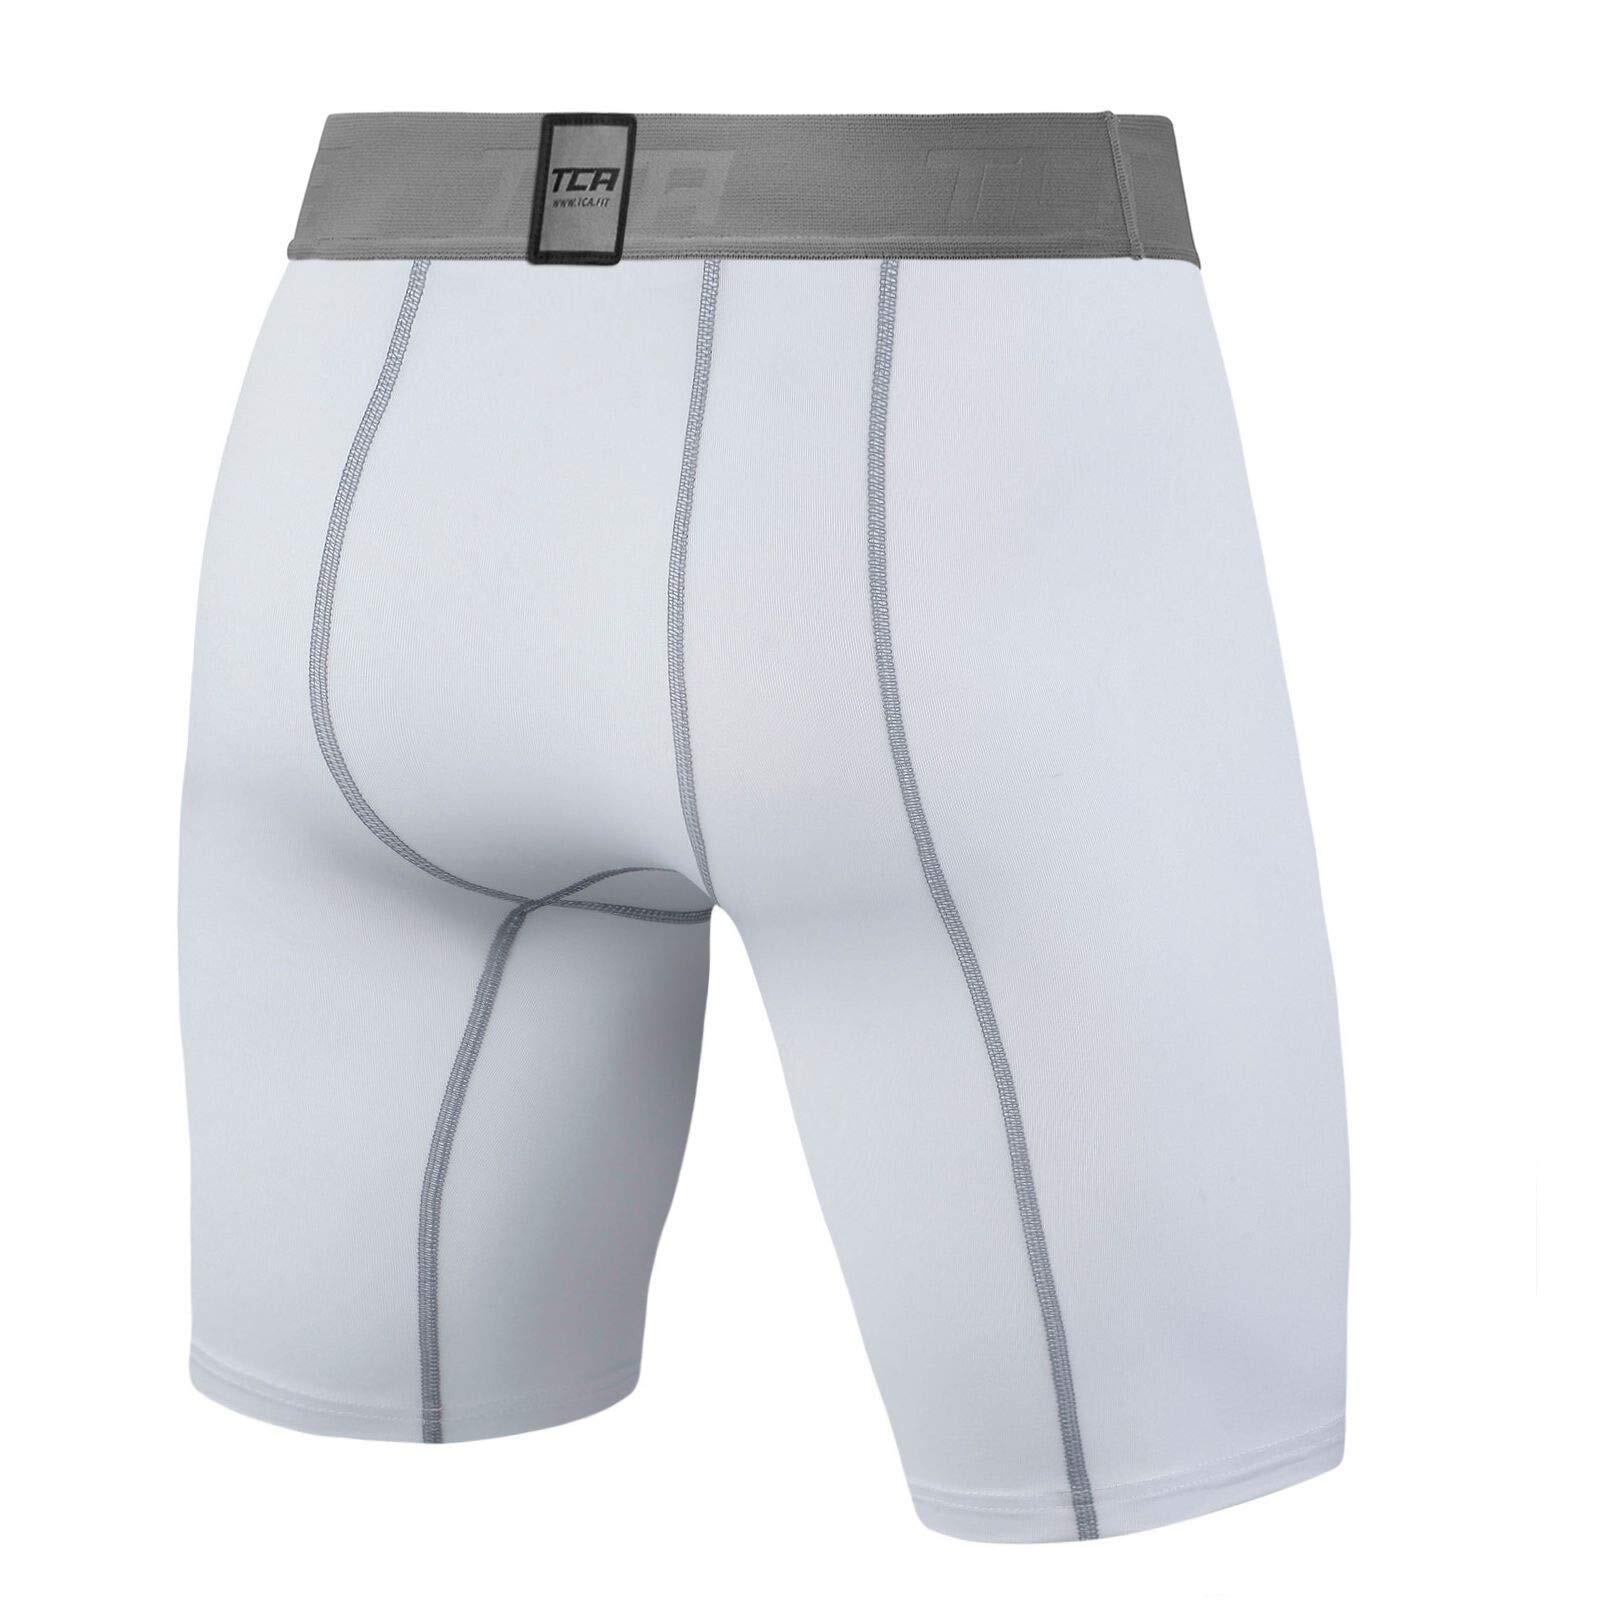 Men's Performance Base Layer Compression Shorts - White 2/5